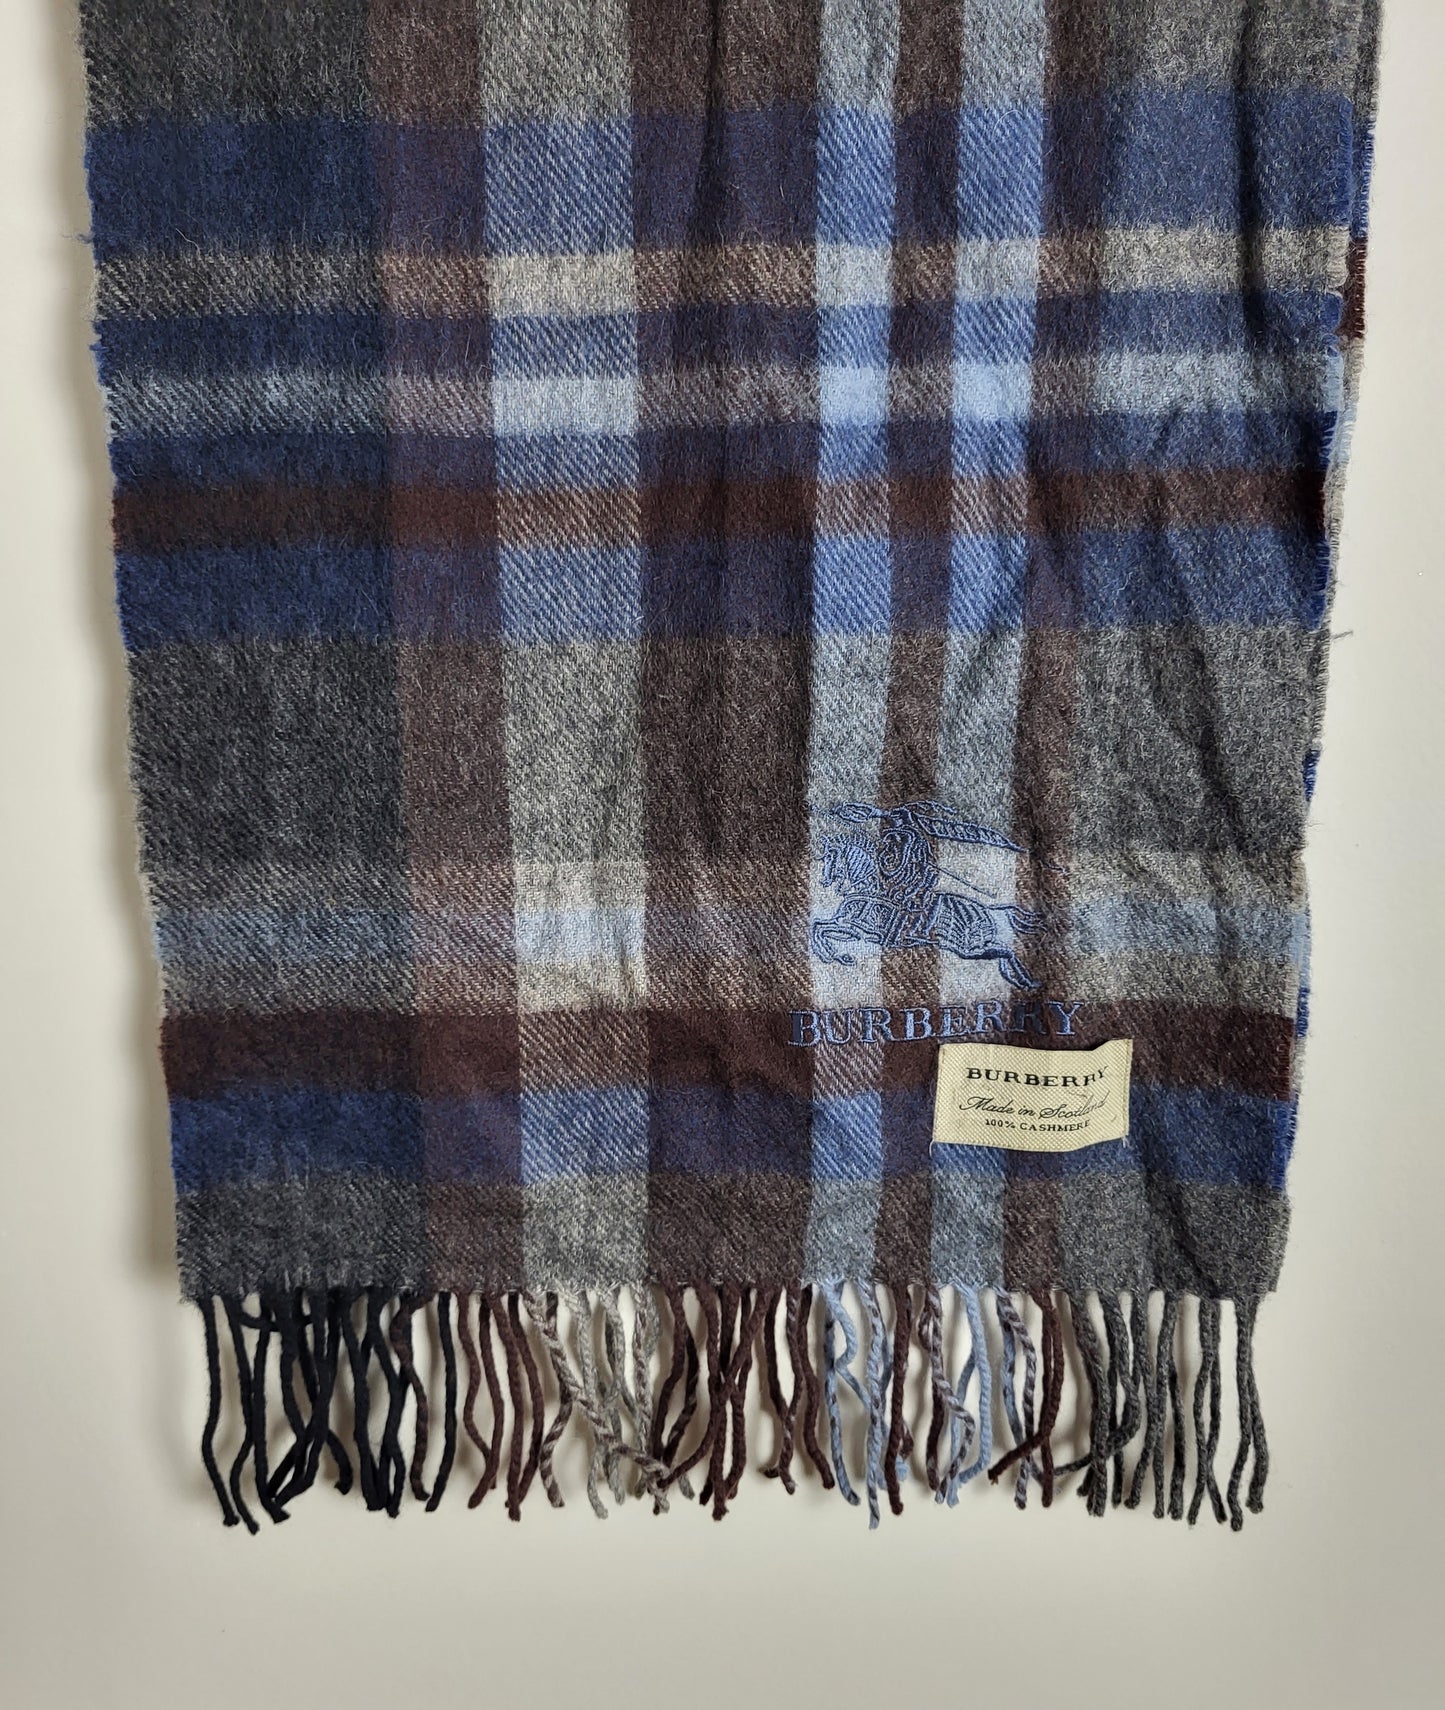 Burberry - Vintage Schal - Blau / Grau Tartan - Kaschmir - 160 x 30